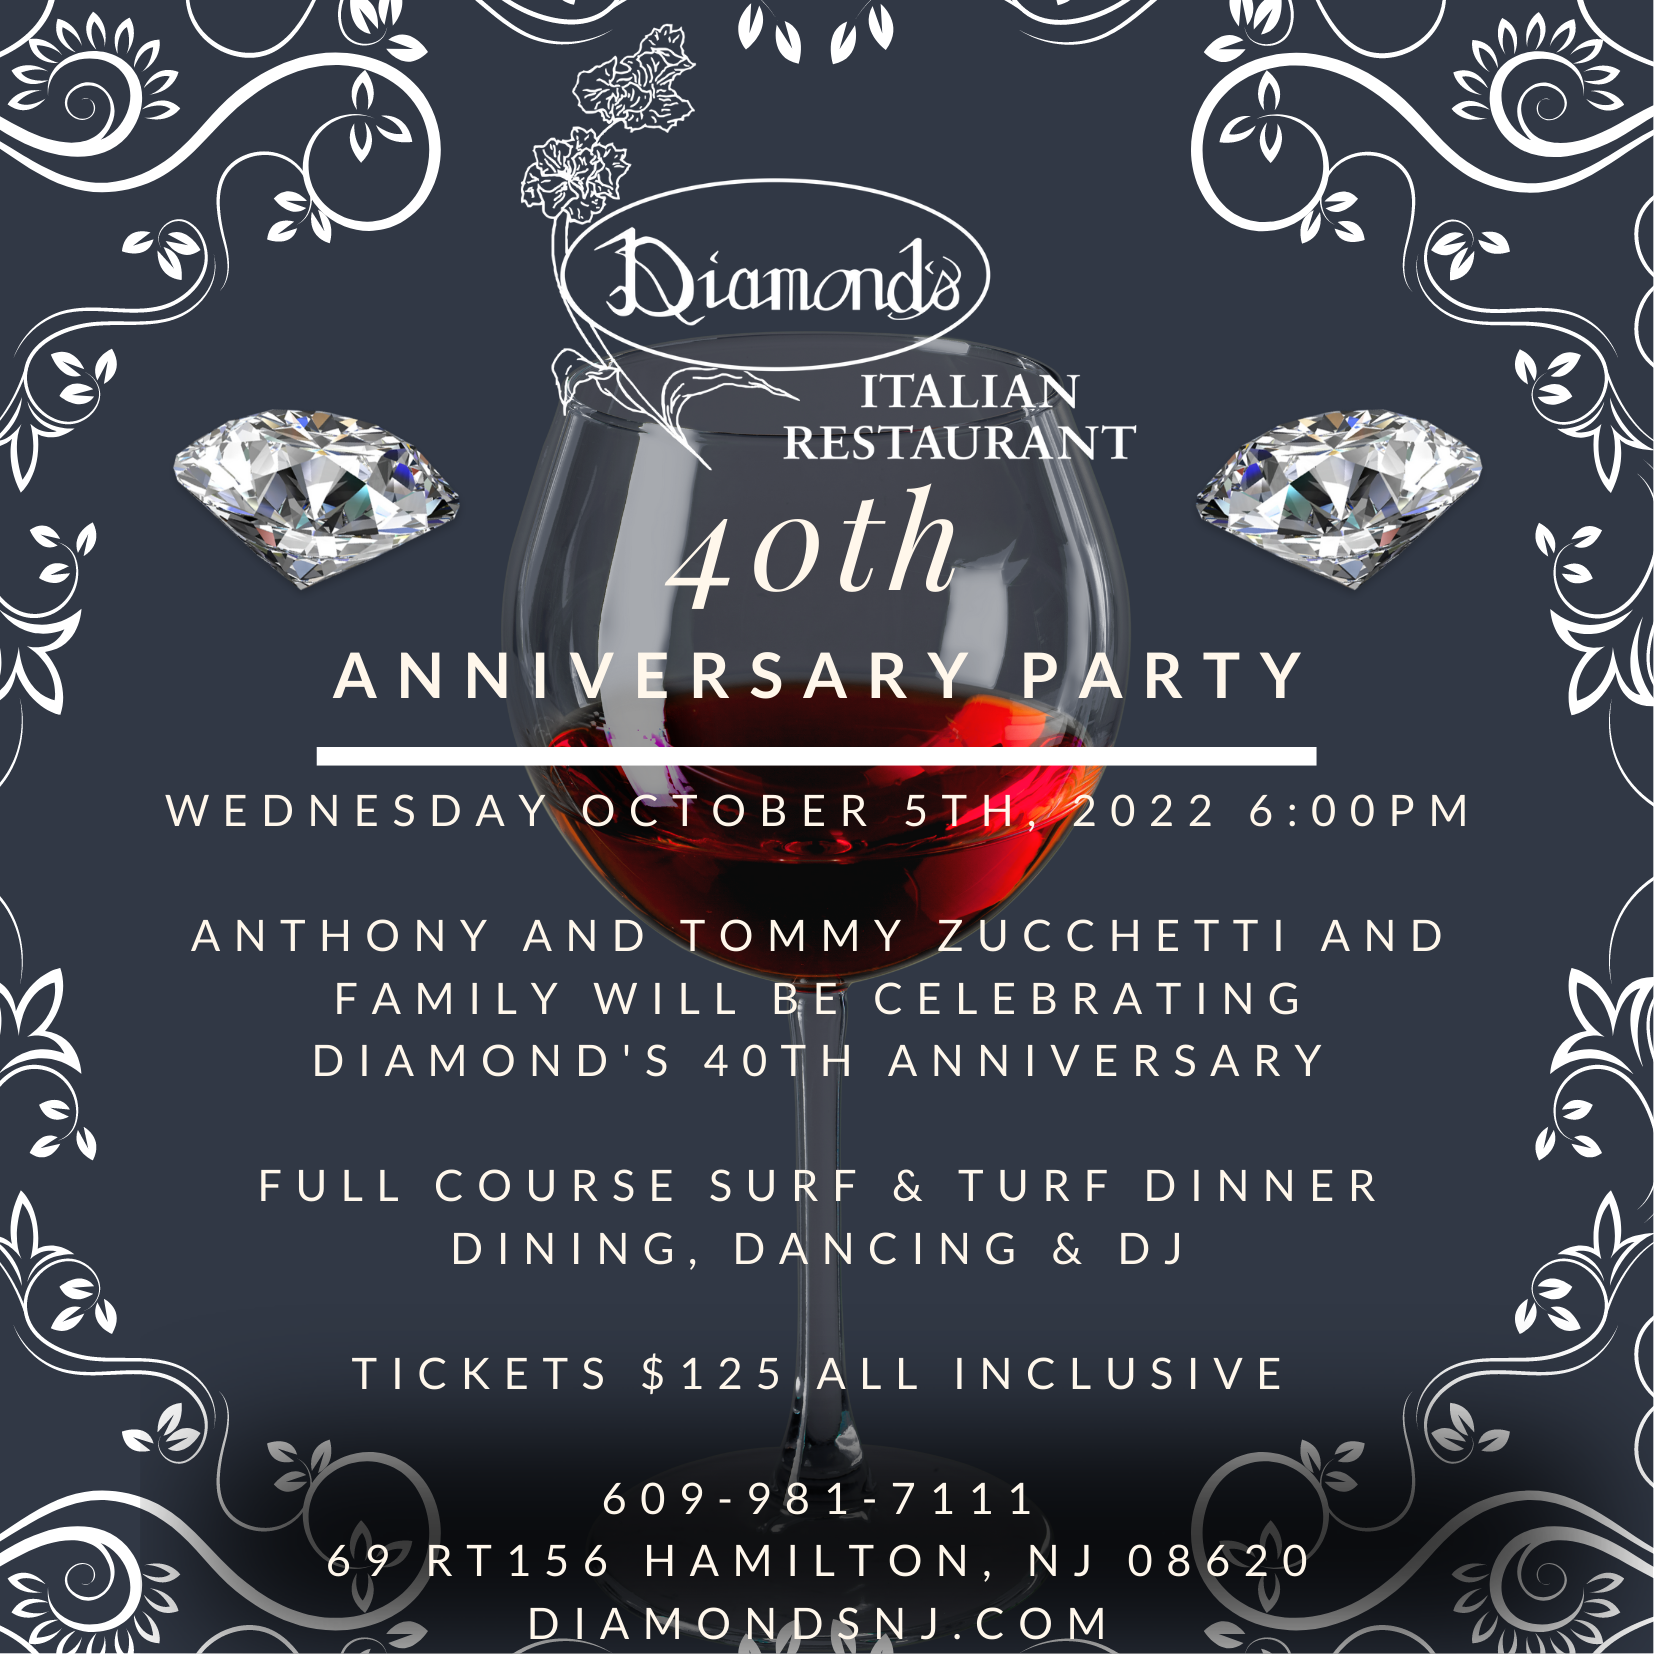 Diamonds 40th anniversary party flyer.